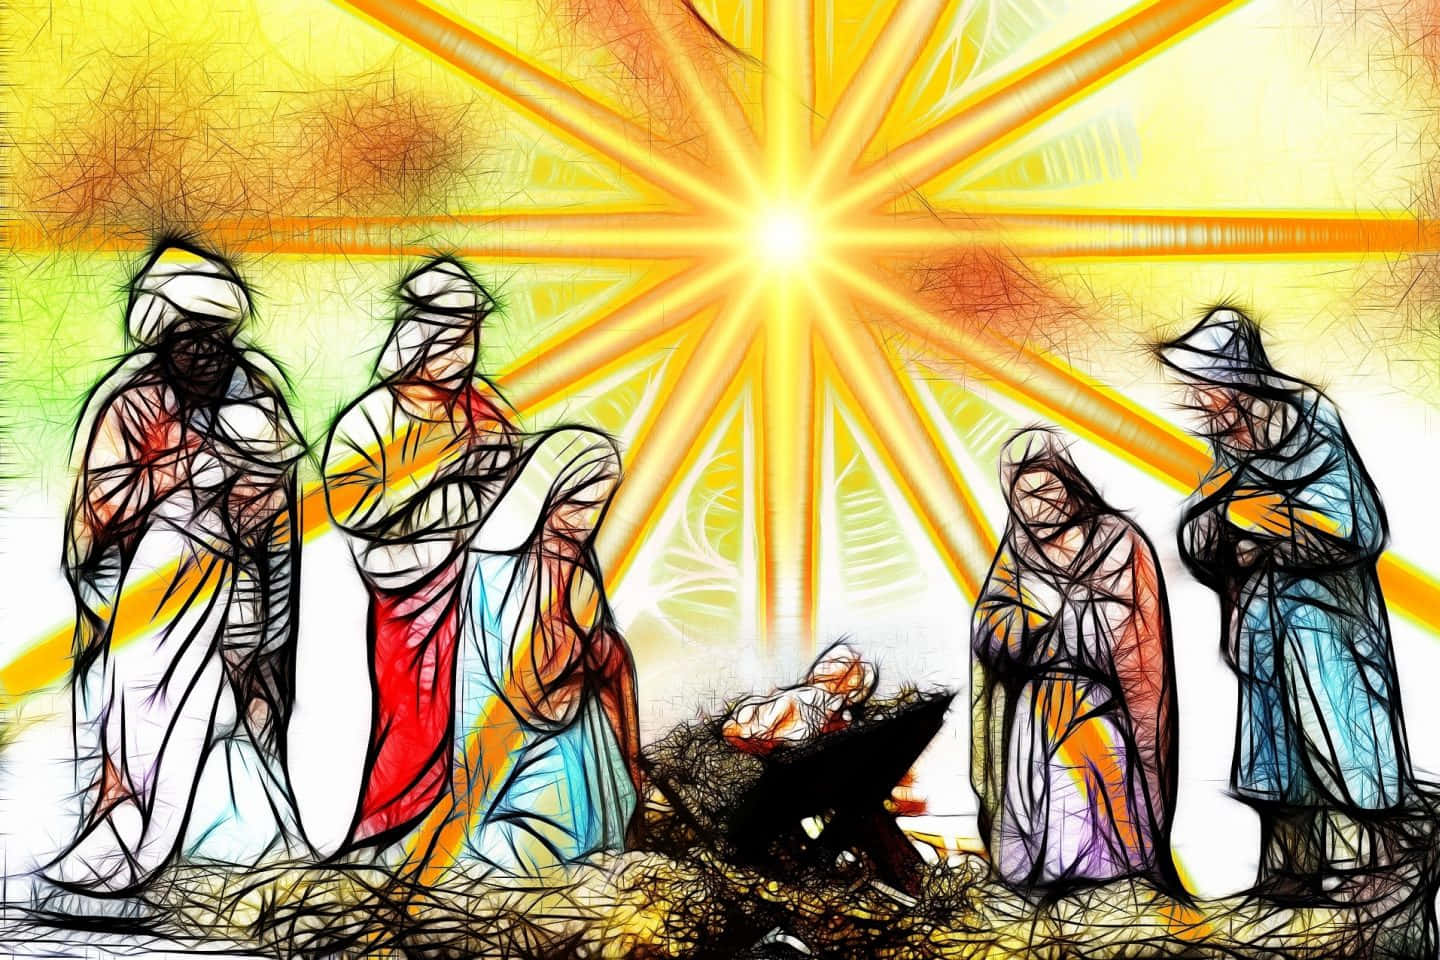 Celebrate the joy of Christmas with a religious spirit